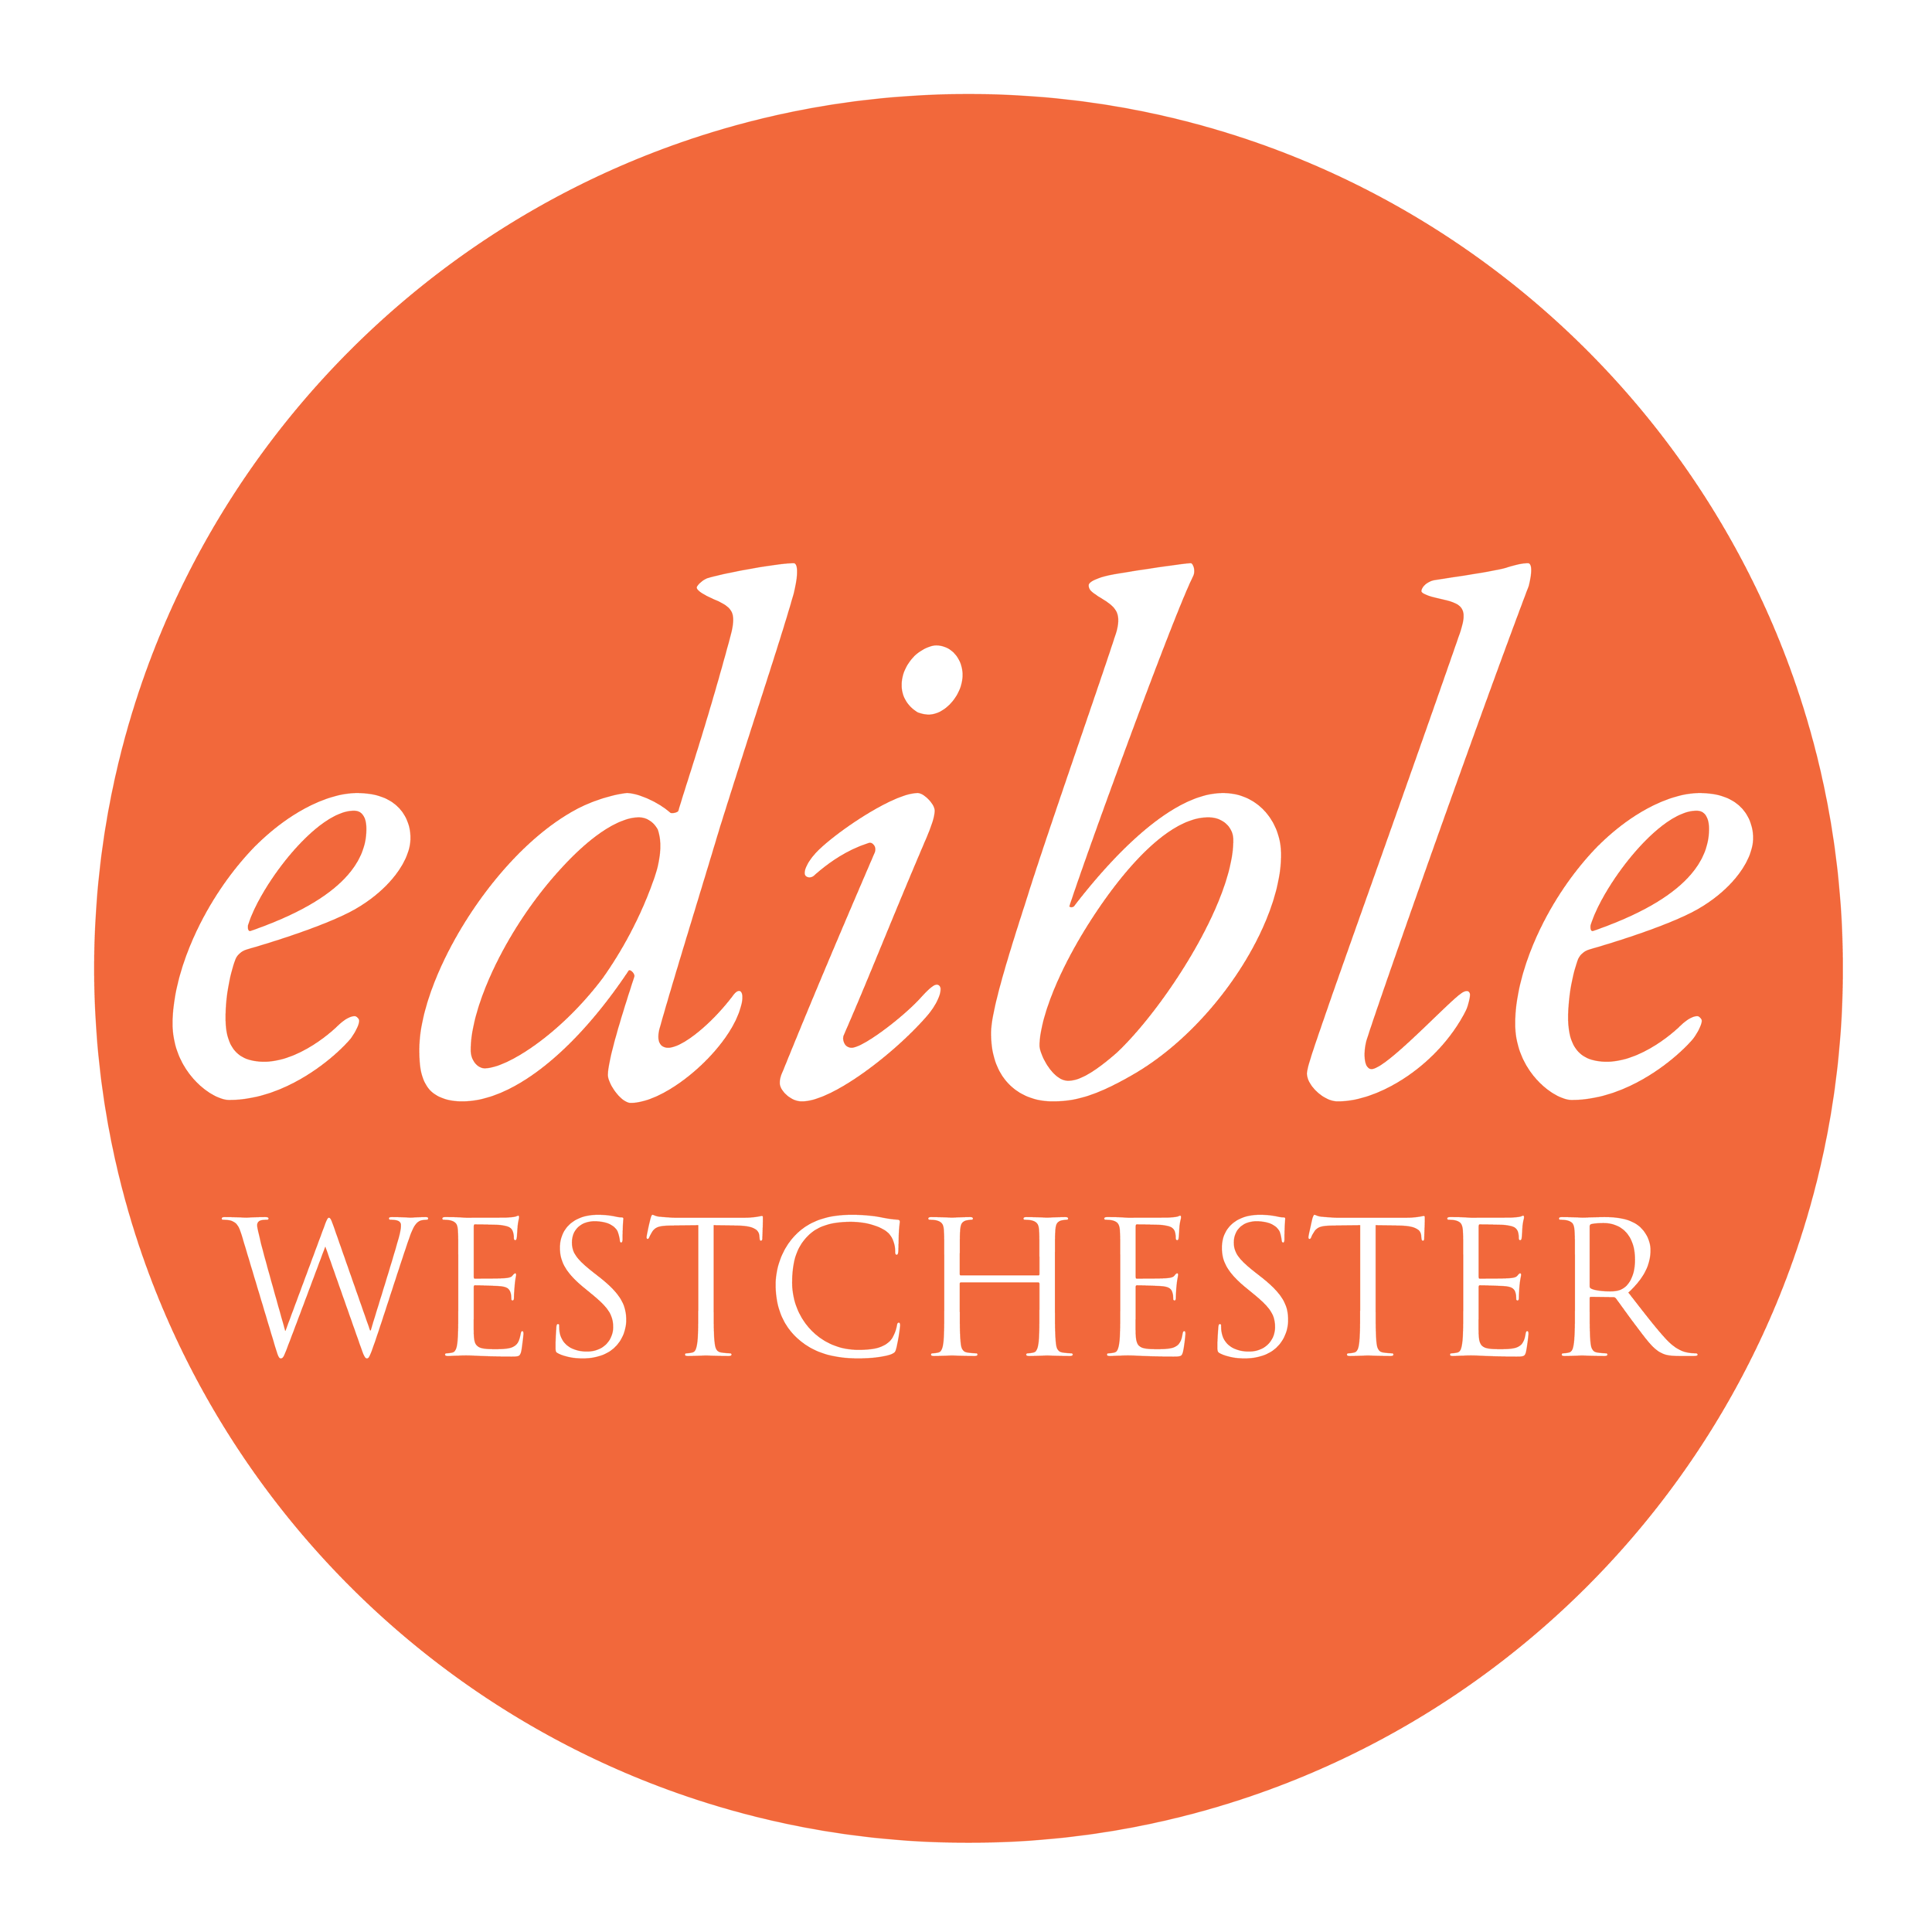 Edible Westchester